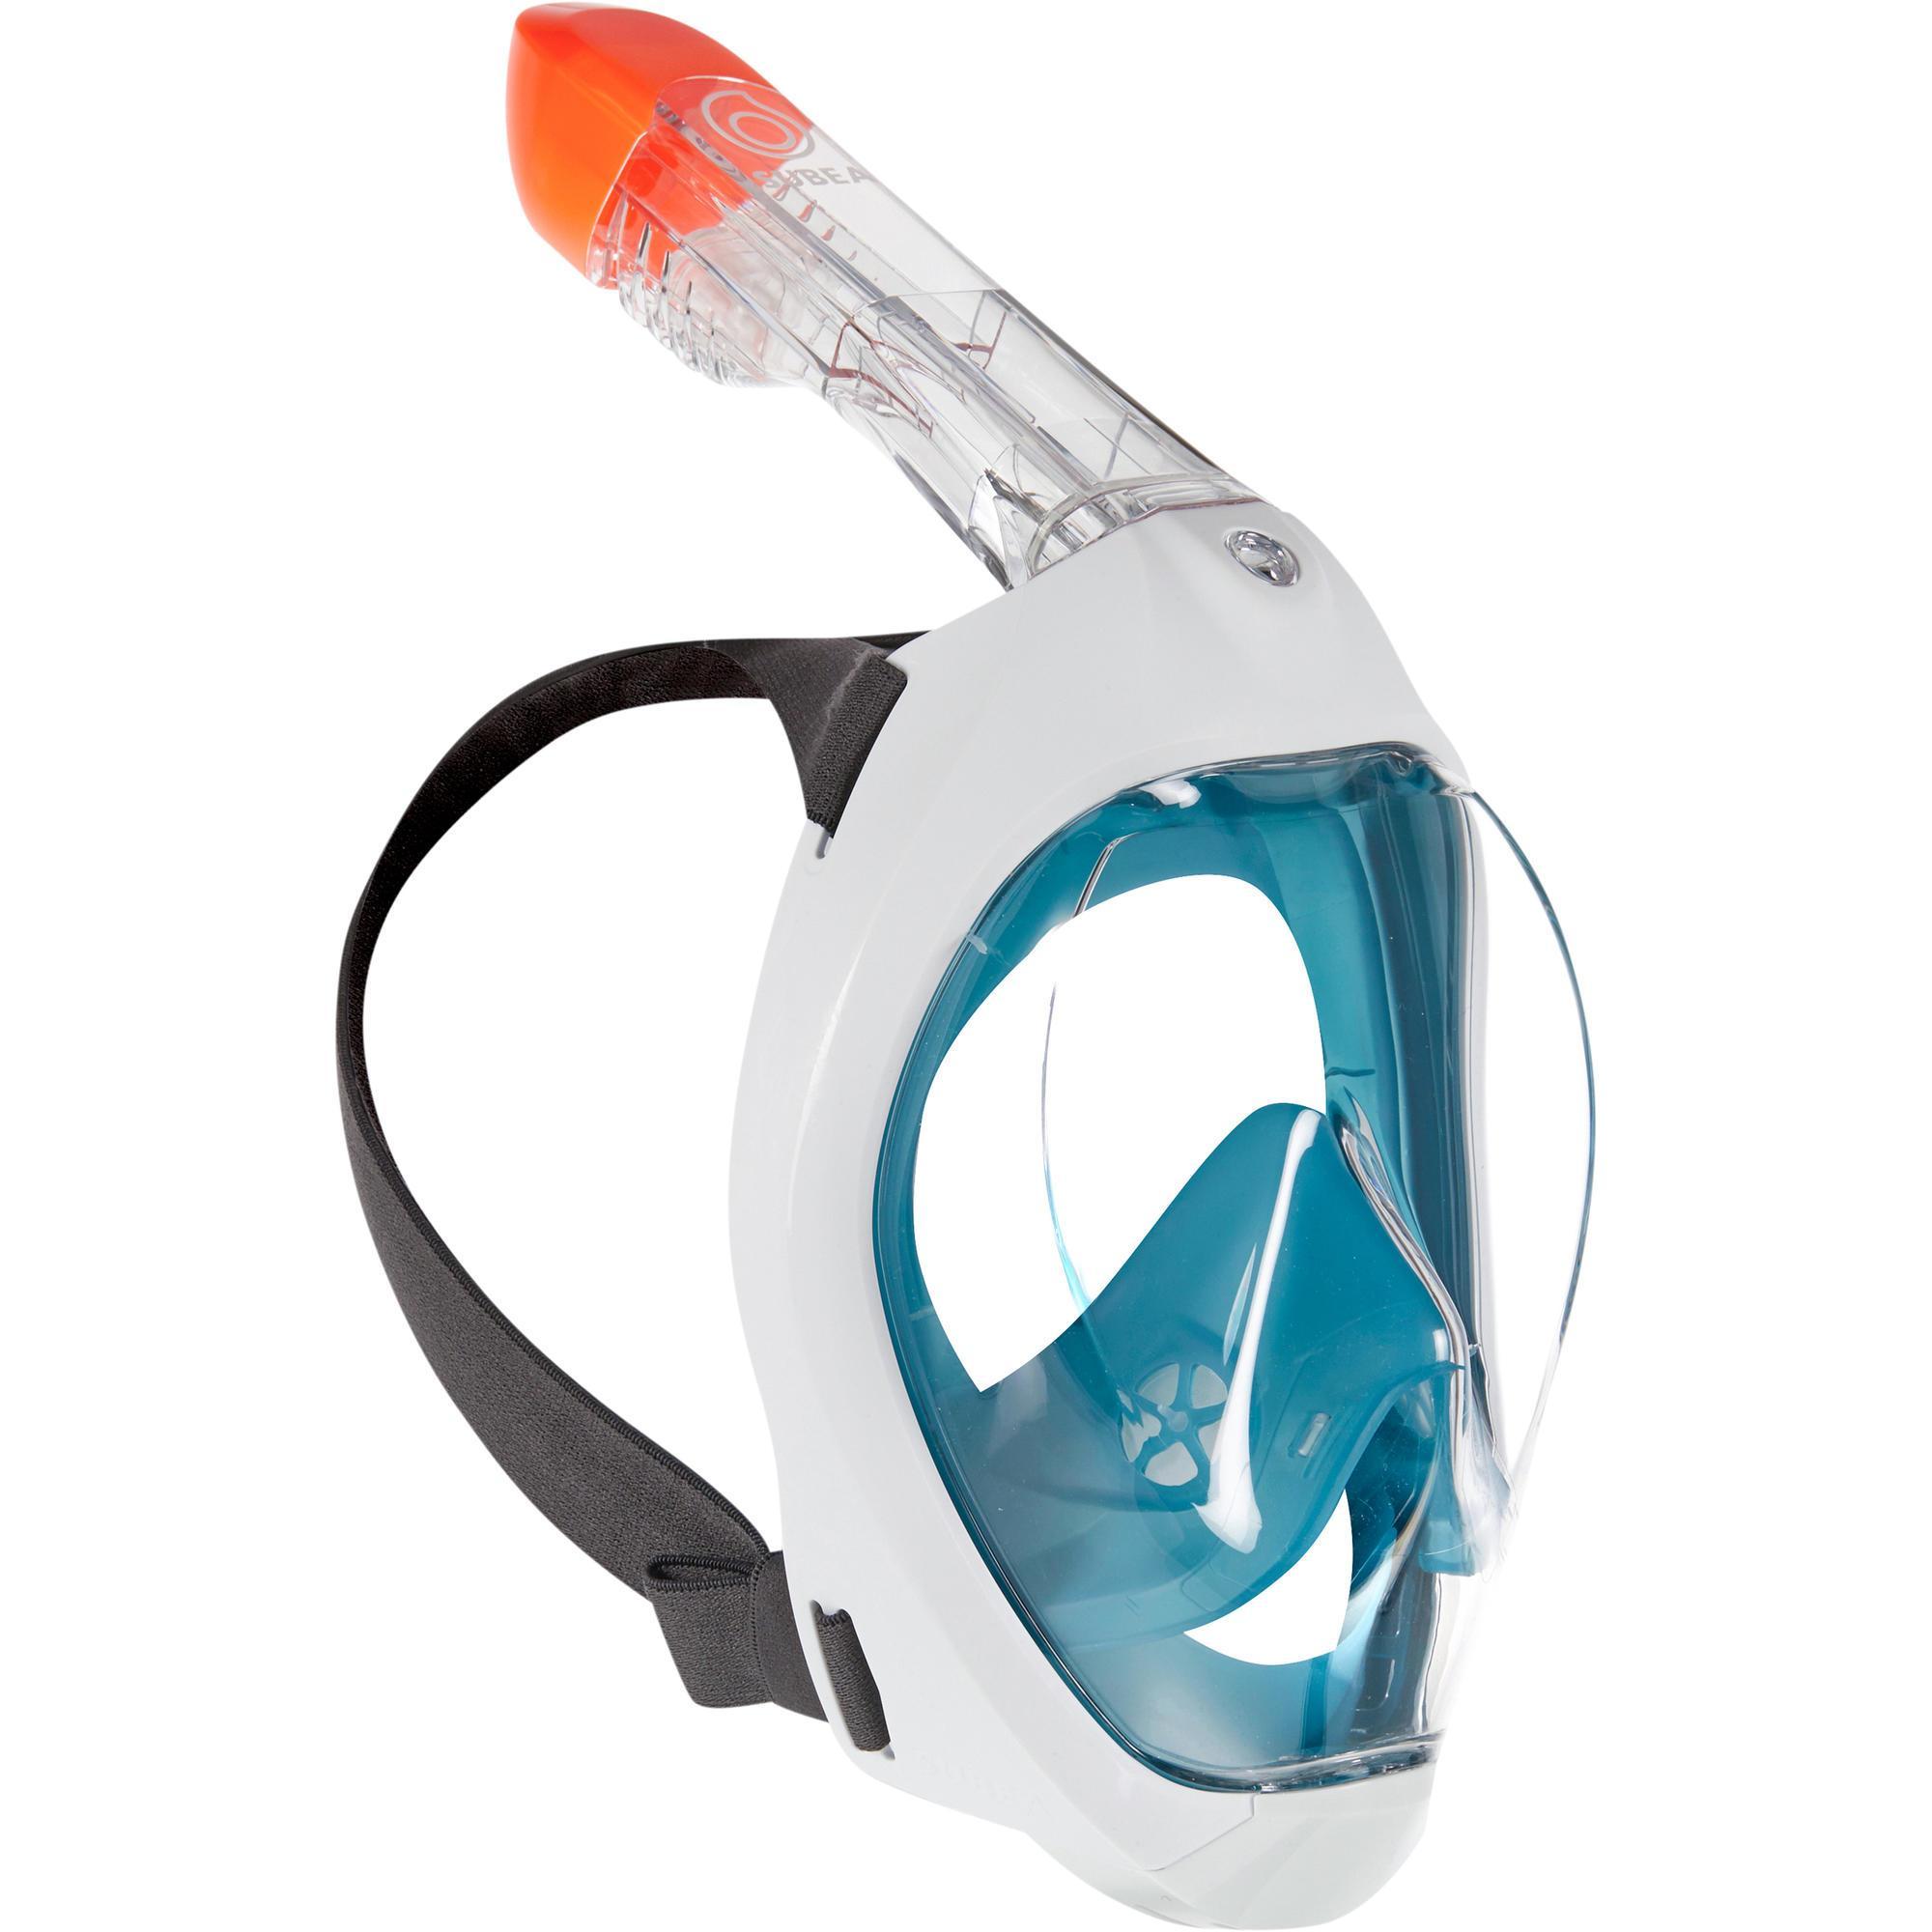 Mască snorkeling Easybreath 500 Turcoaz Adulți La Oferta Online decathlon imagine La Oferta Online